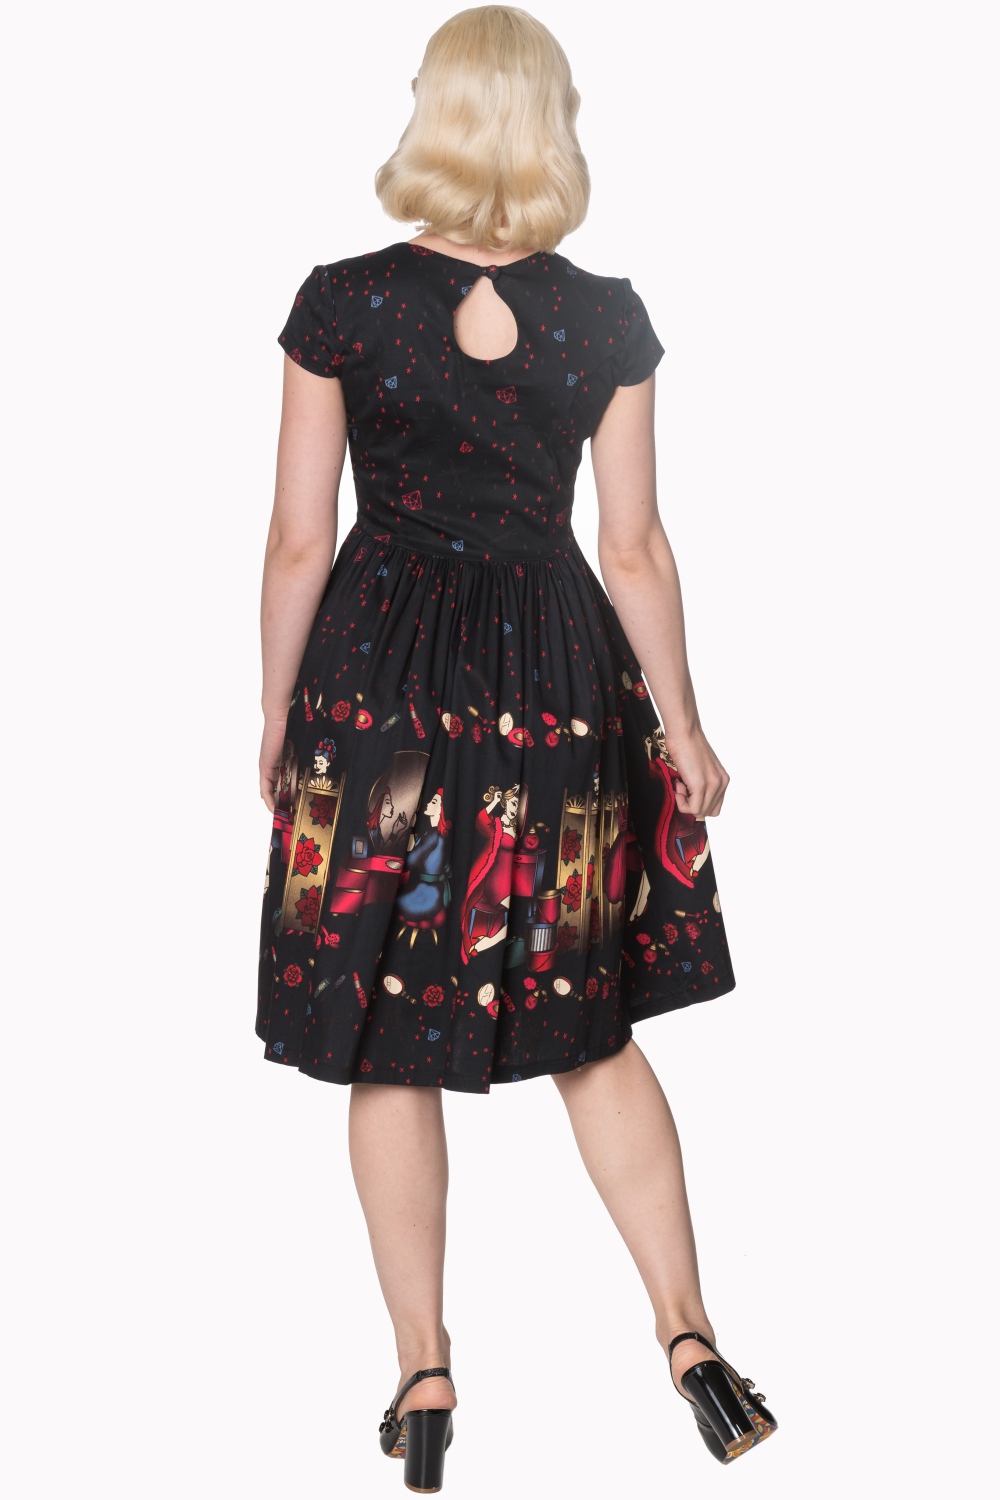 Dancing Days Vanity Hem Print Black Red 1950s Pencil Wiggle Dress 